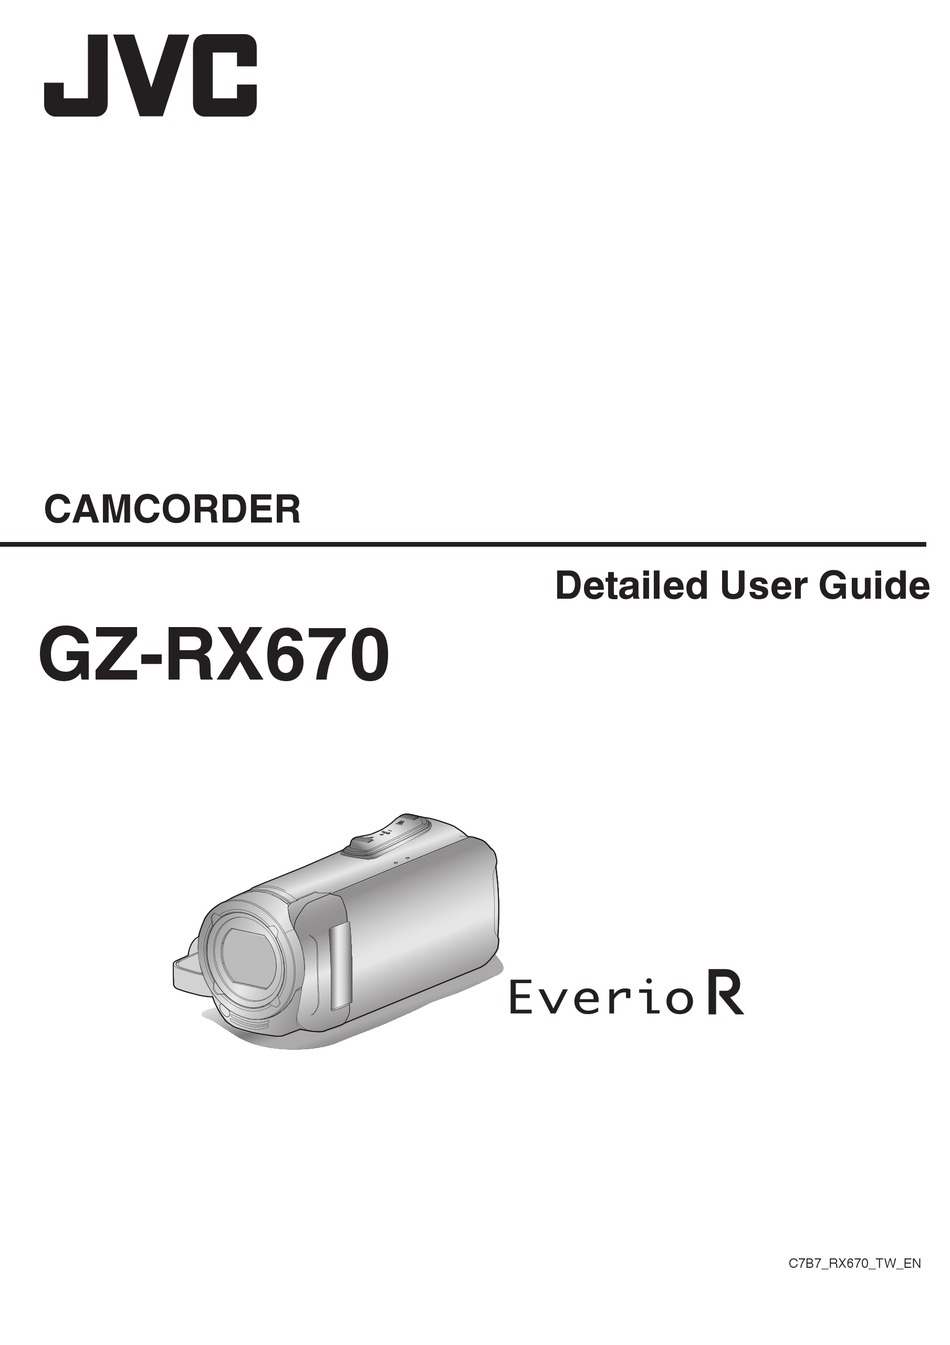 JVC EVERIO R GZ-RX670 DETAILED USER MANUAL Pdf Download | ManualsLib